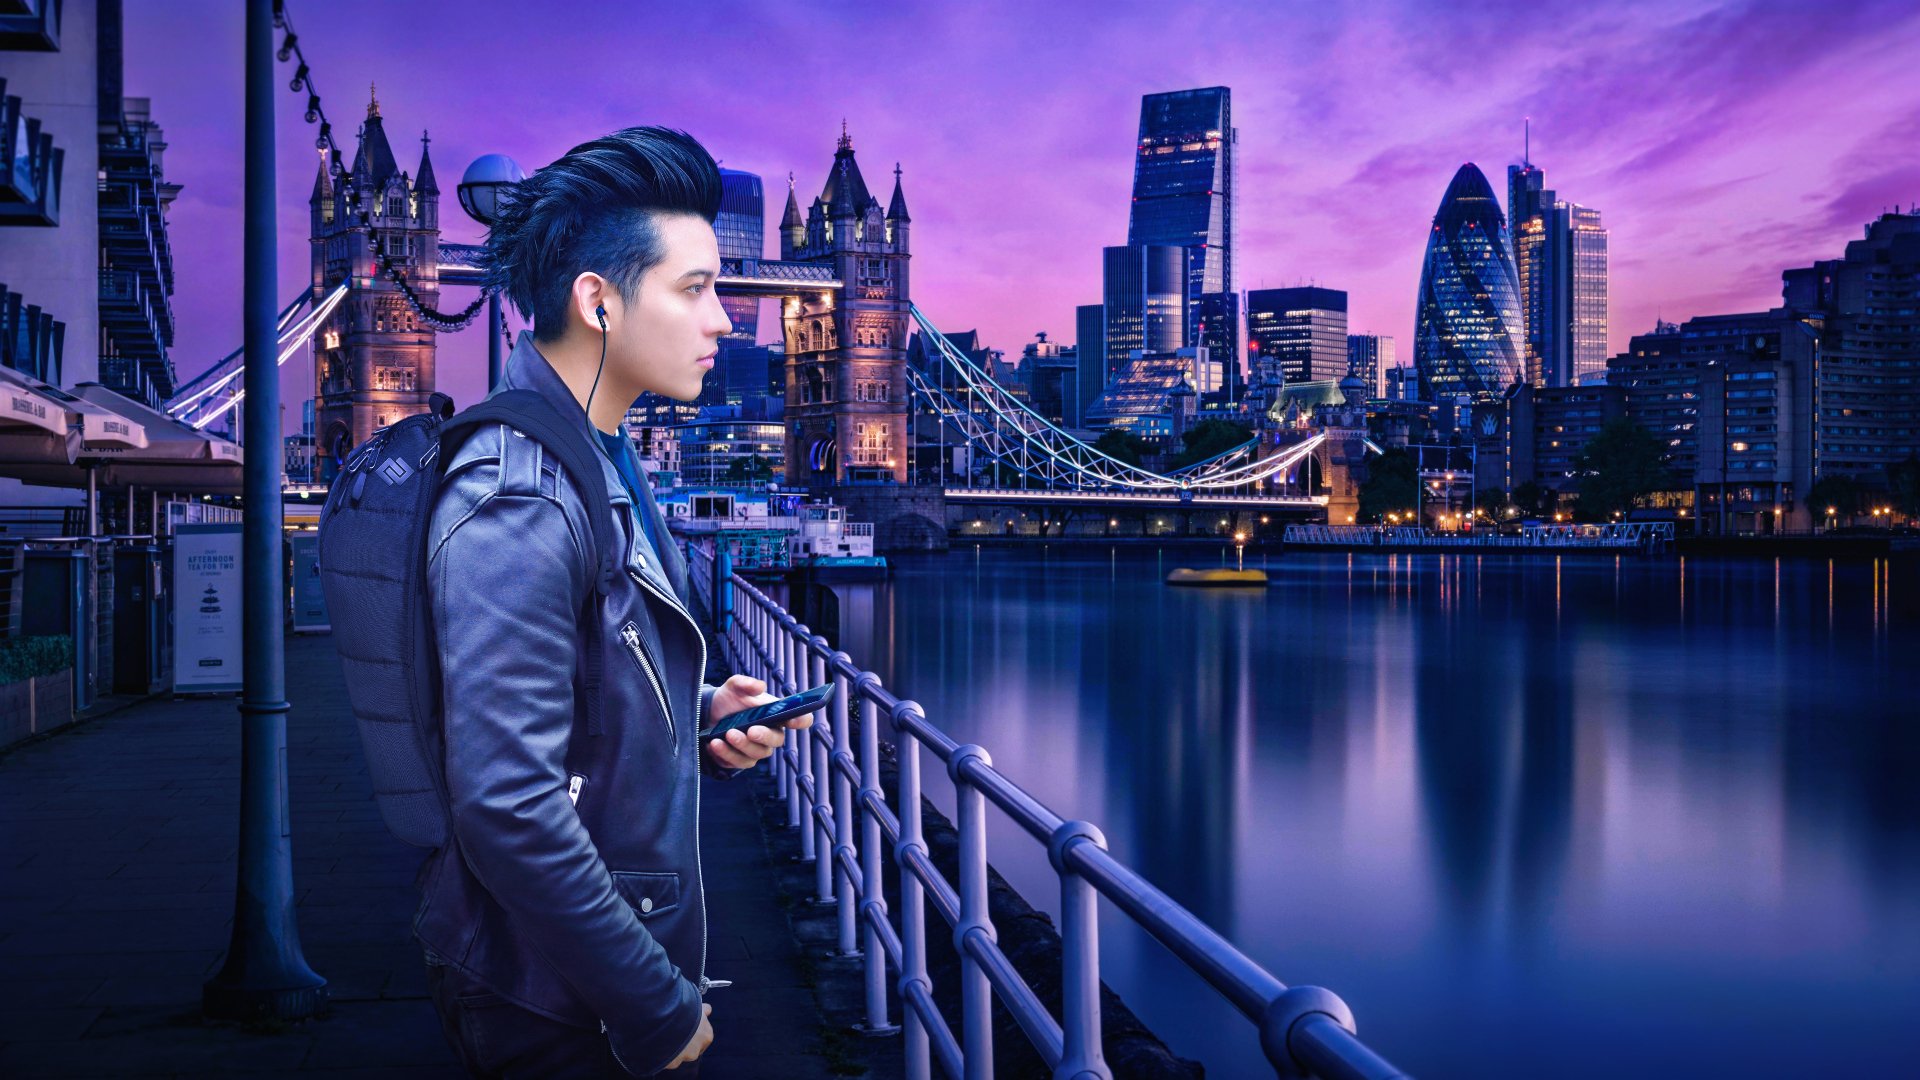 Cityscape Blue Hour London by natxder